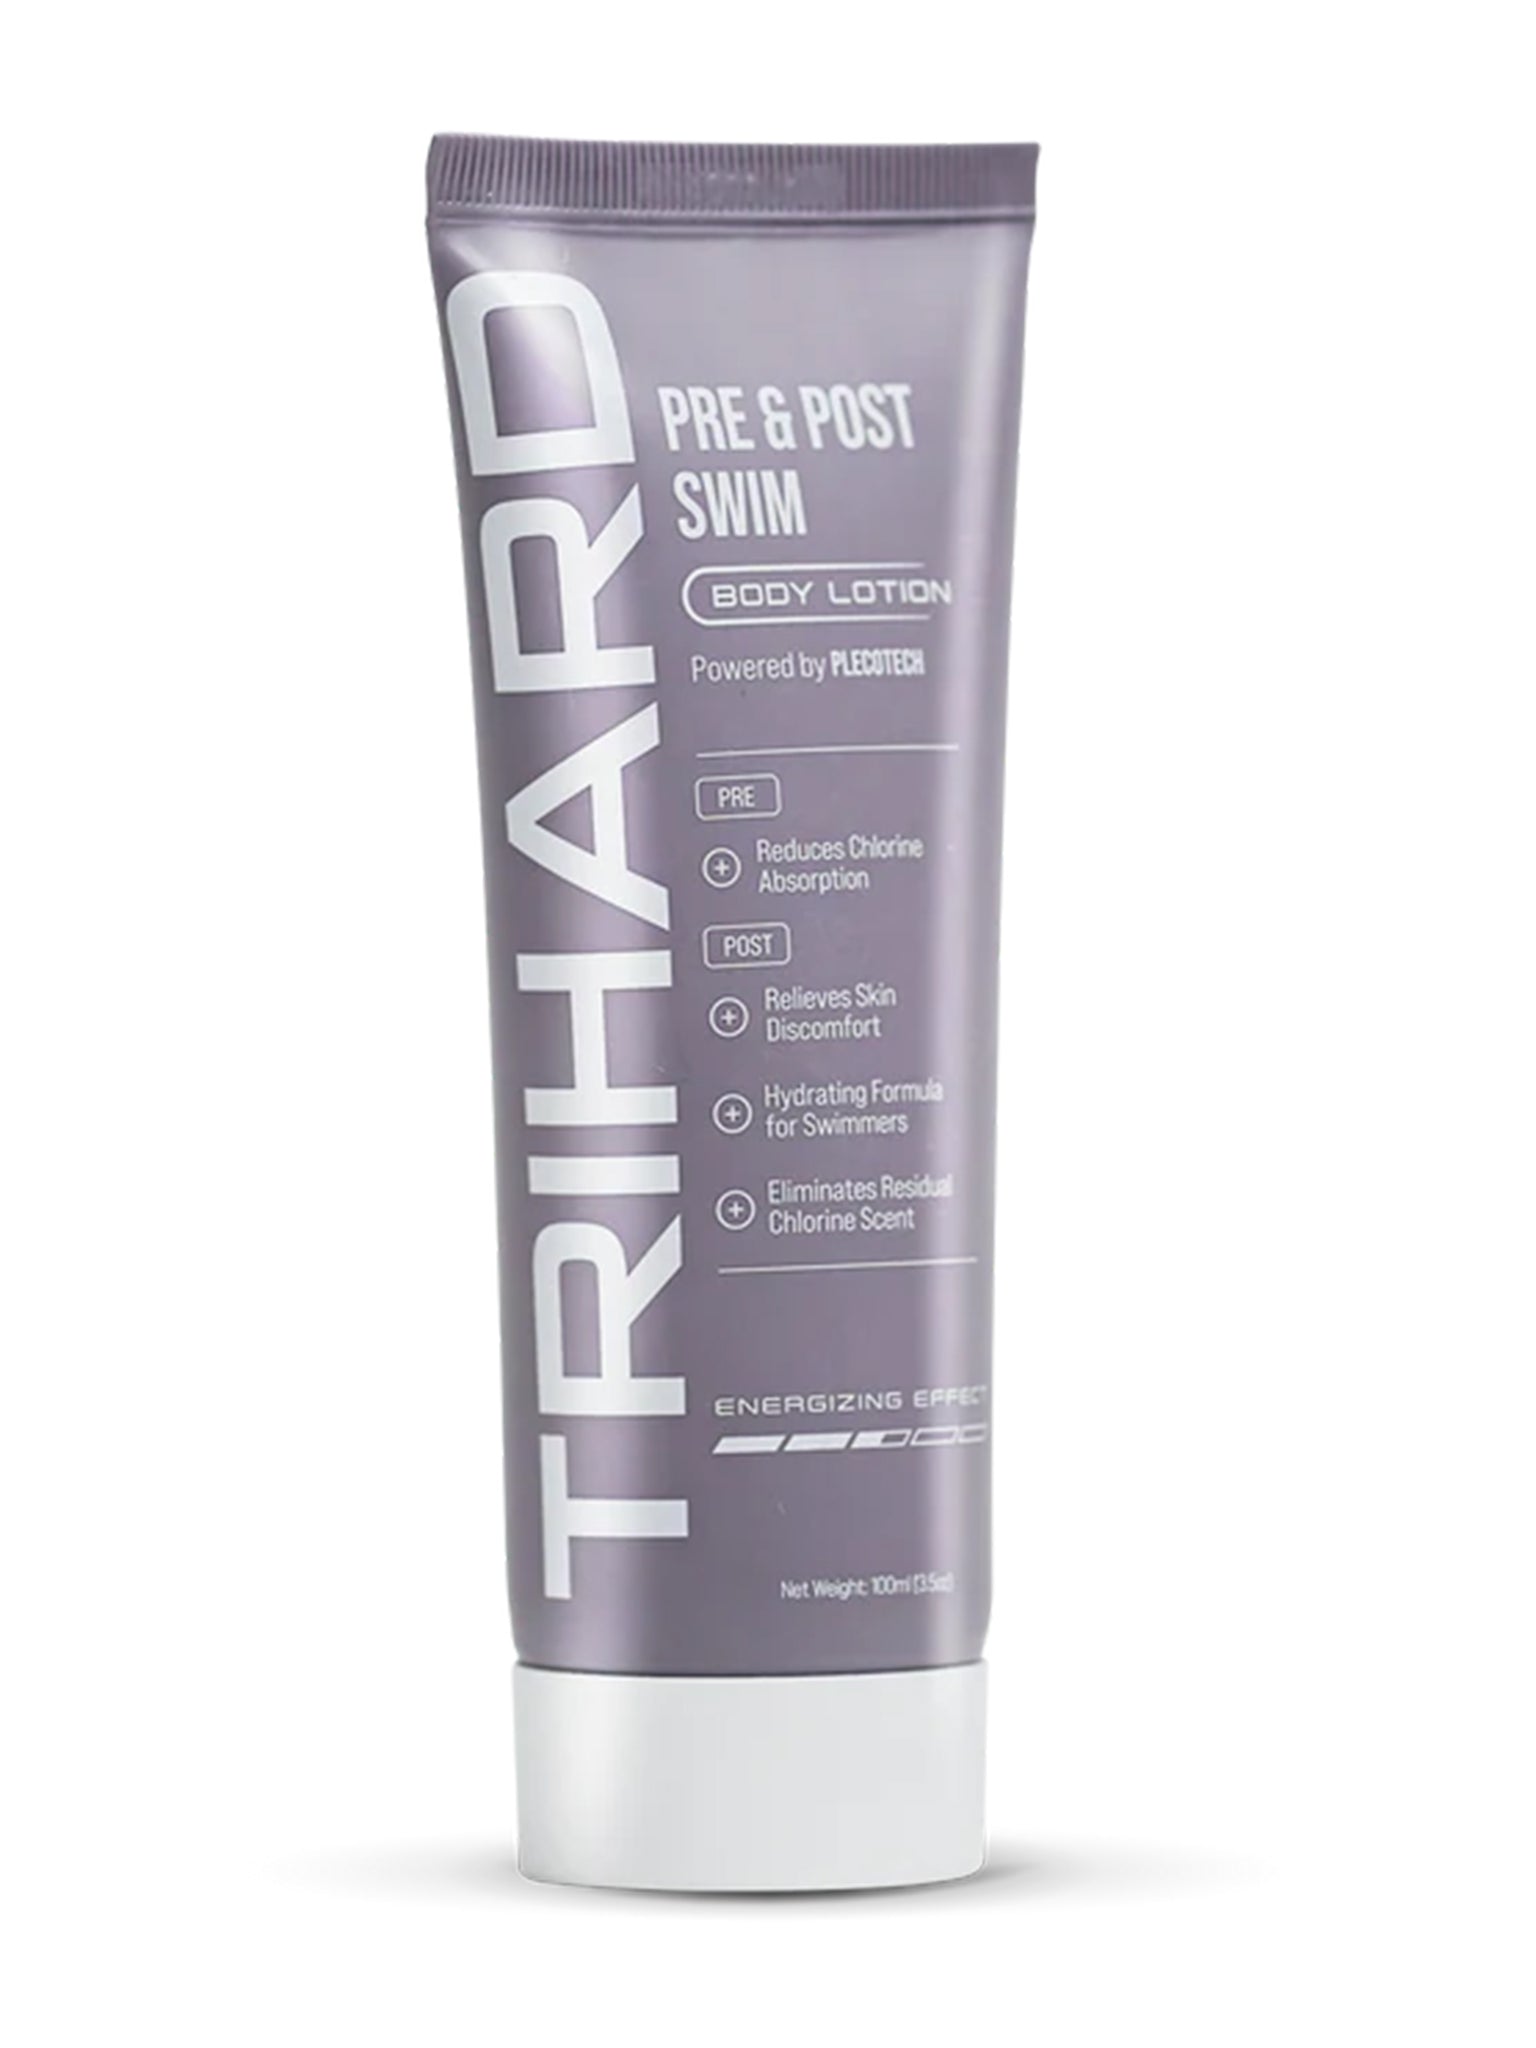 Trihard moisturizing lotion